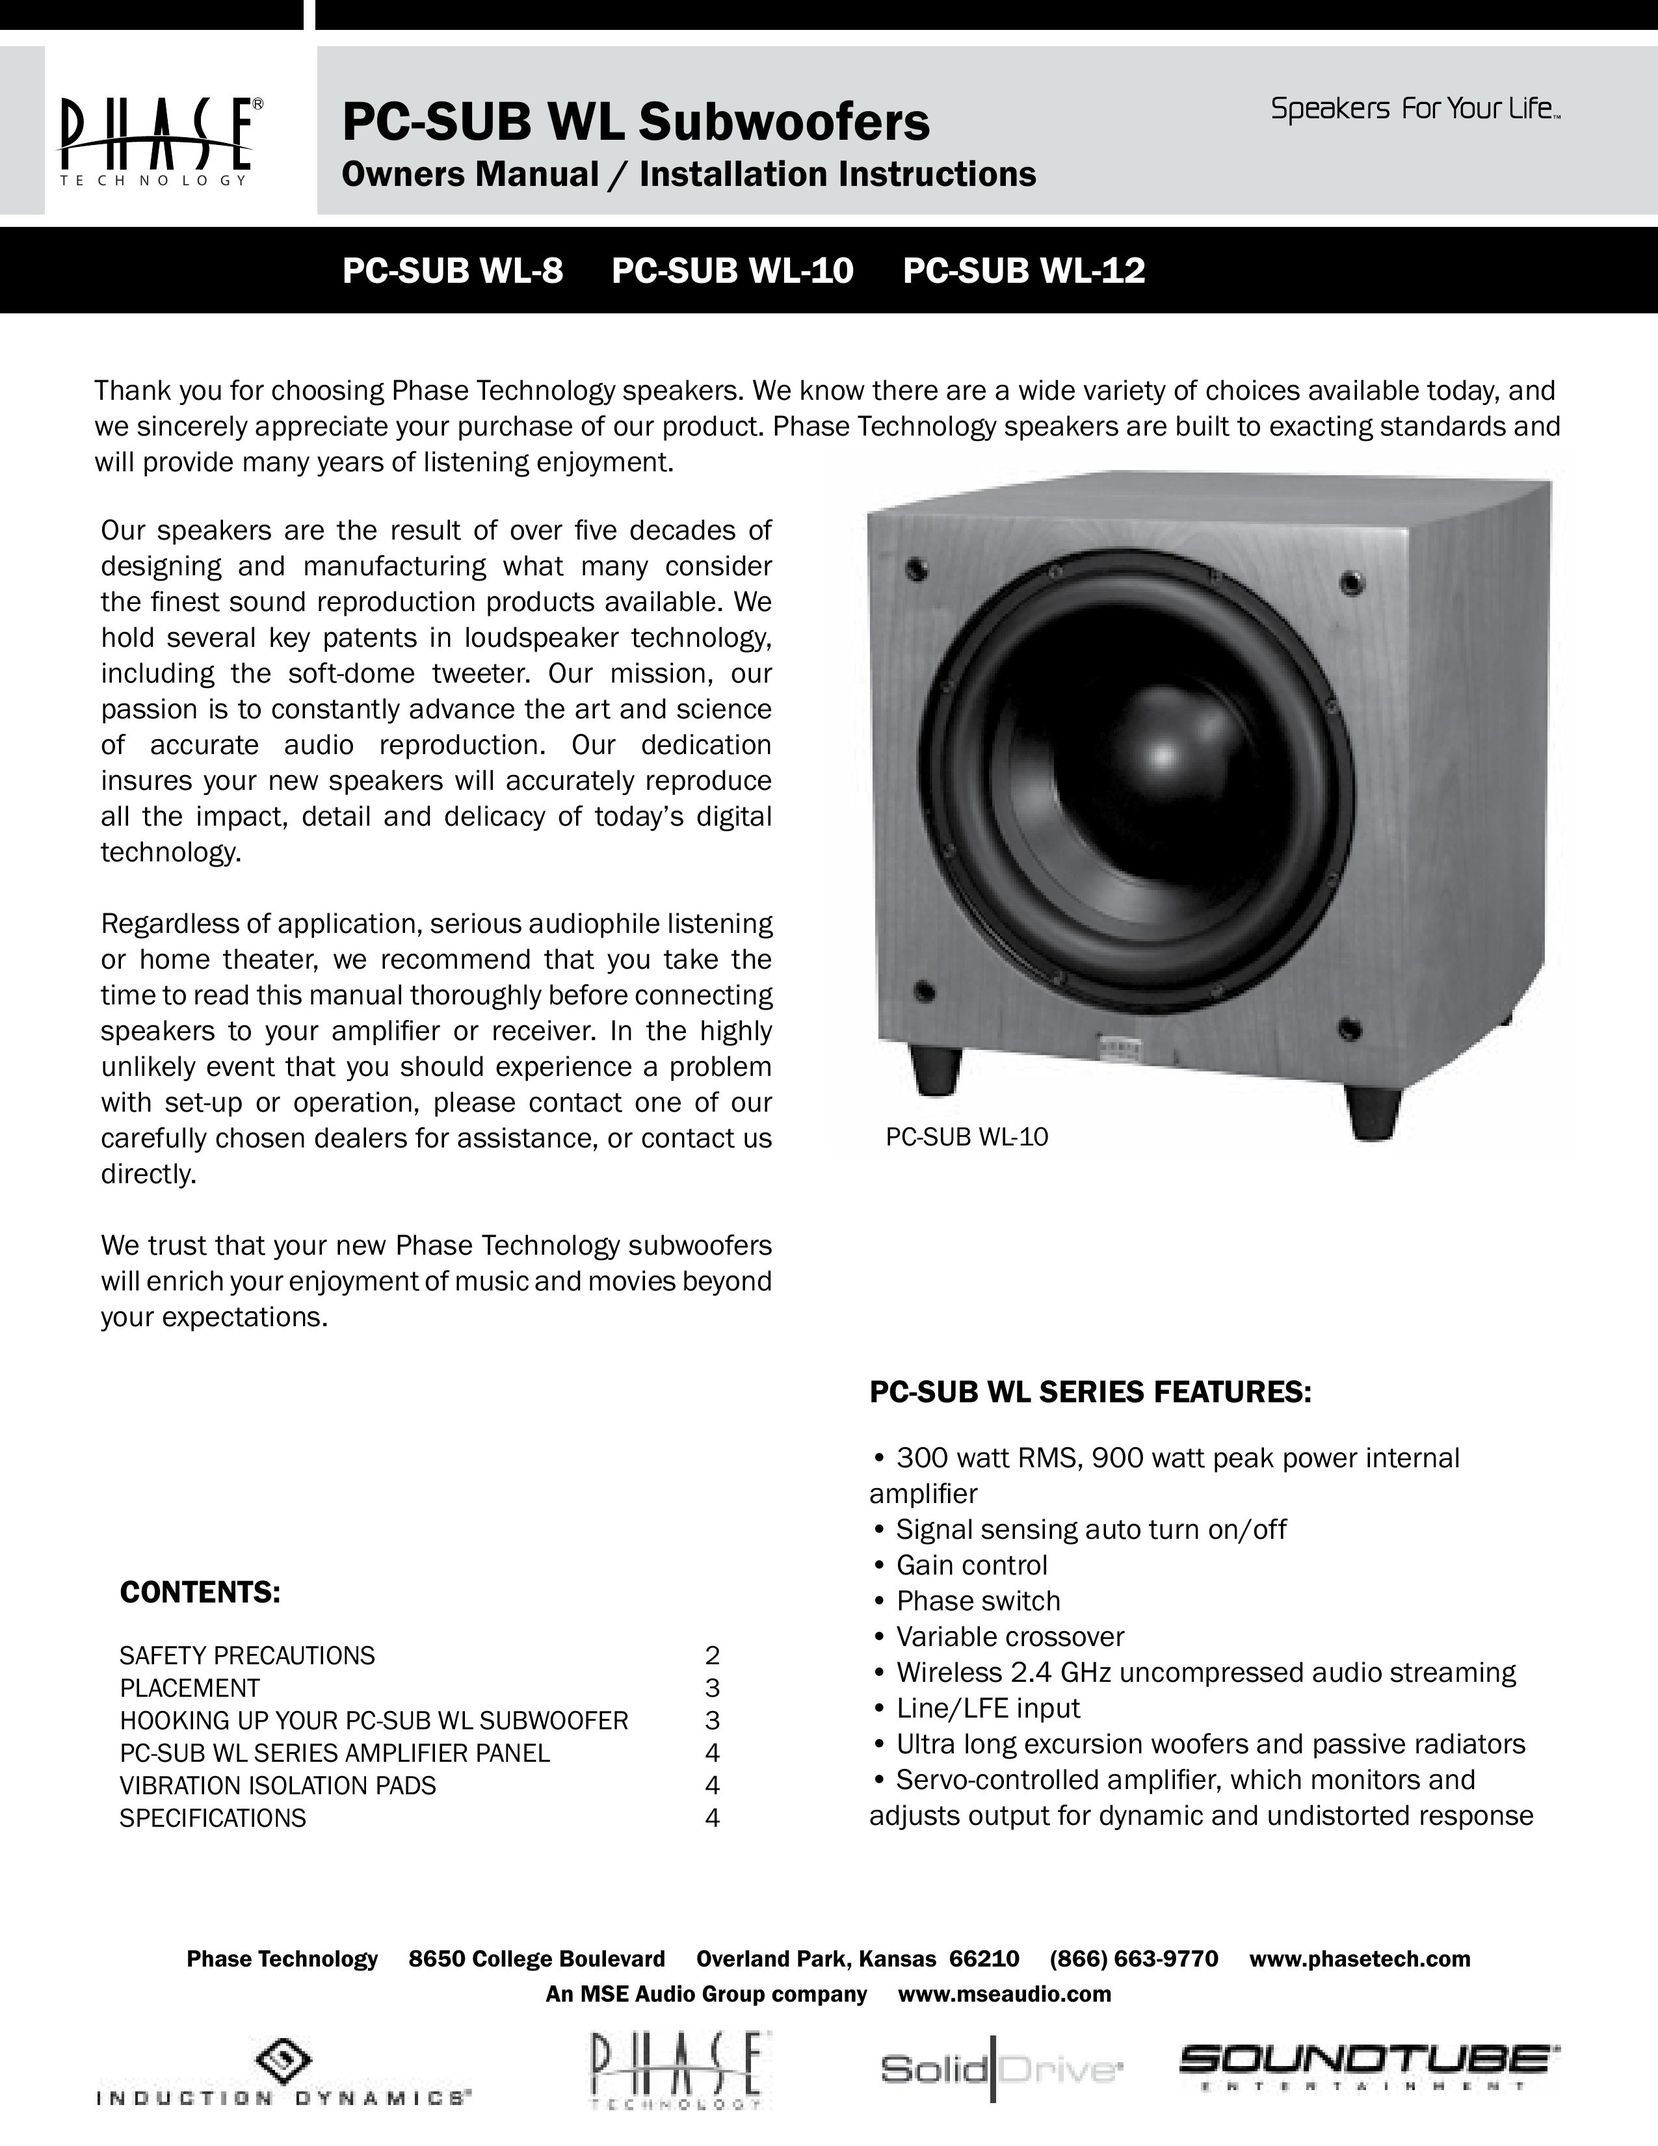 Phase Technology PC-SUB WL-8 Speaker User Manual